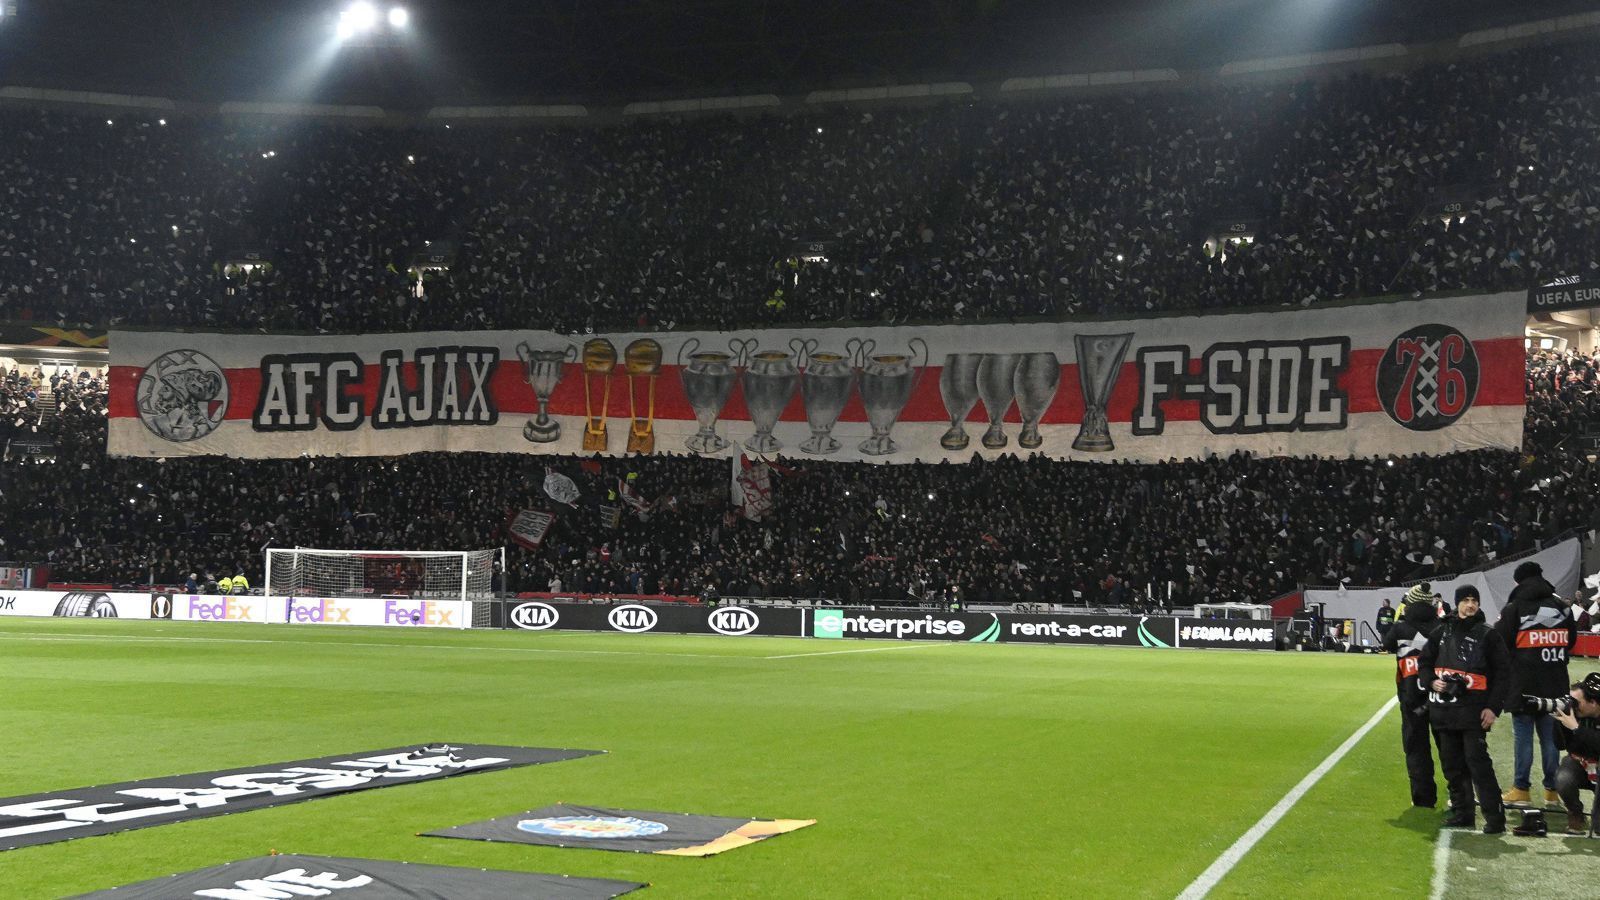 
                <strong>Platz 15 - Ajax Amsterdam</strong><br>
                Zuschauerschnitt: 53.342Stadion: Johan Cruijff ArenA (54.990 Plätze)Liga: EredevisieLand: Niederlande
              